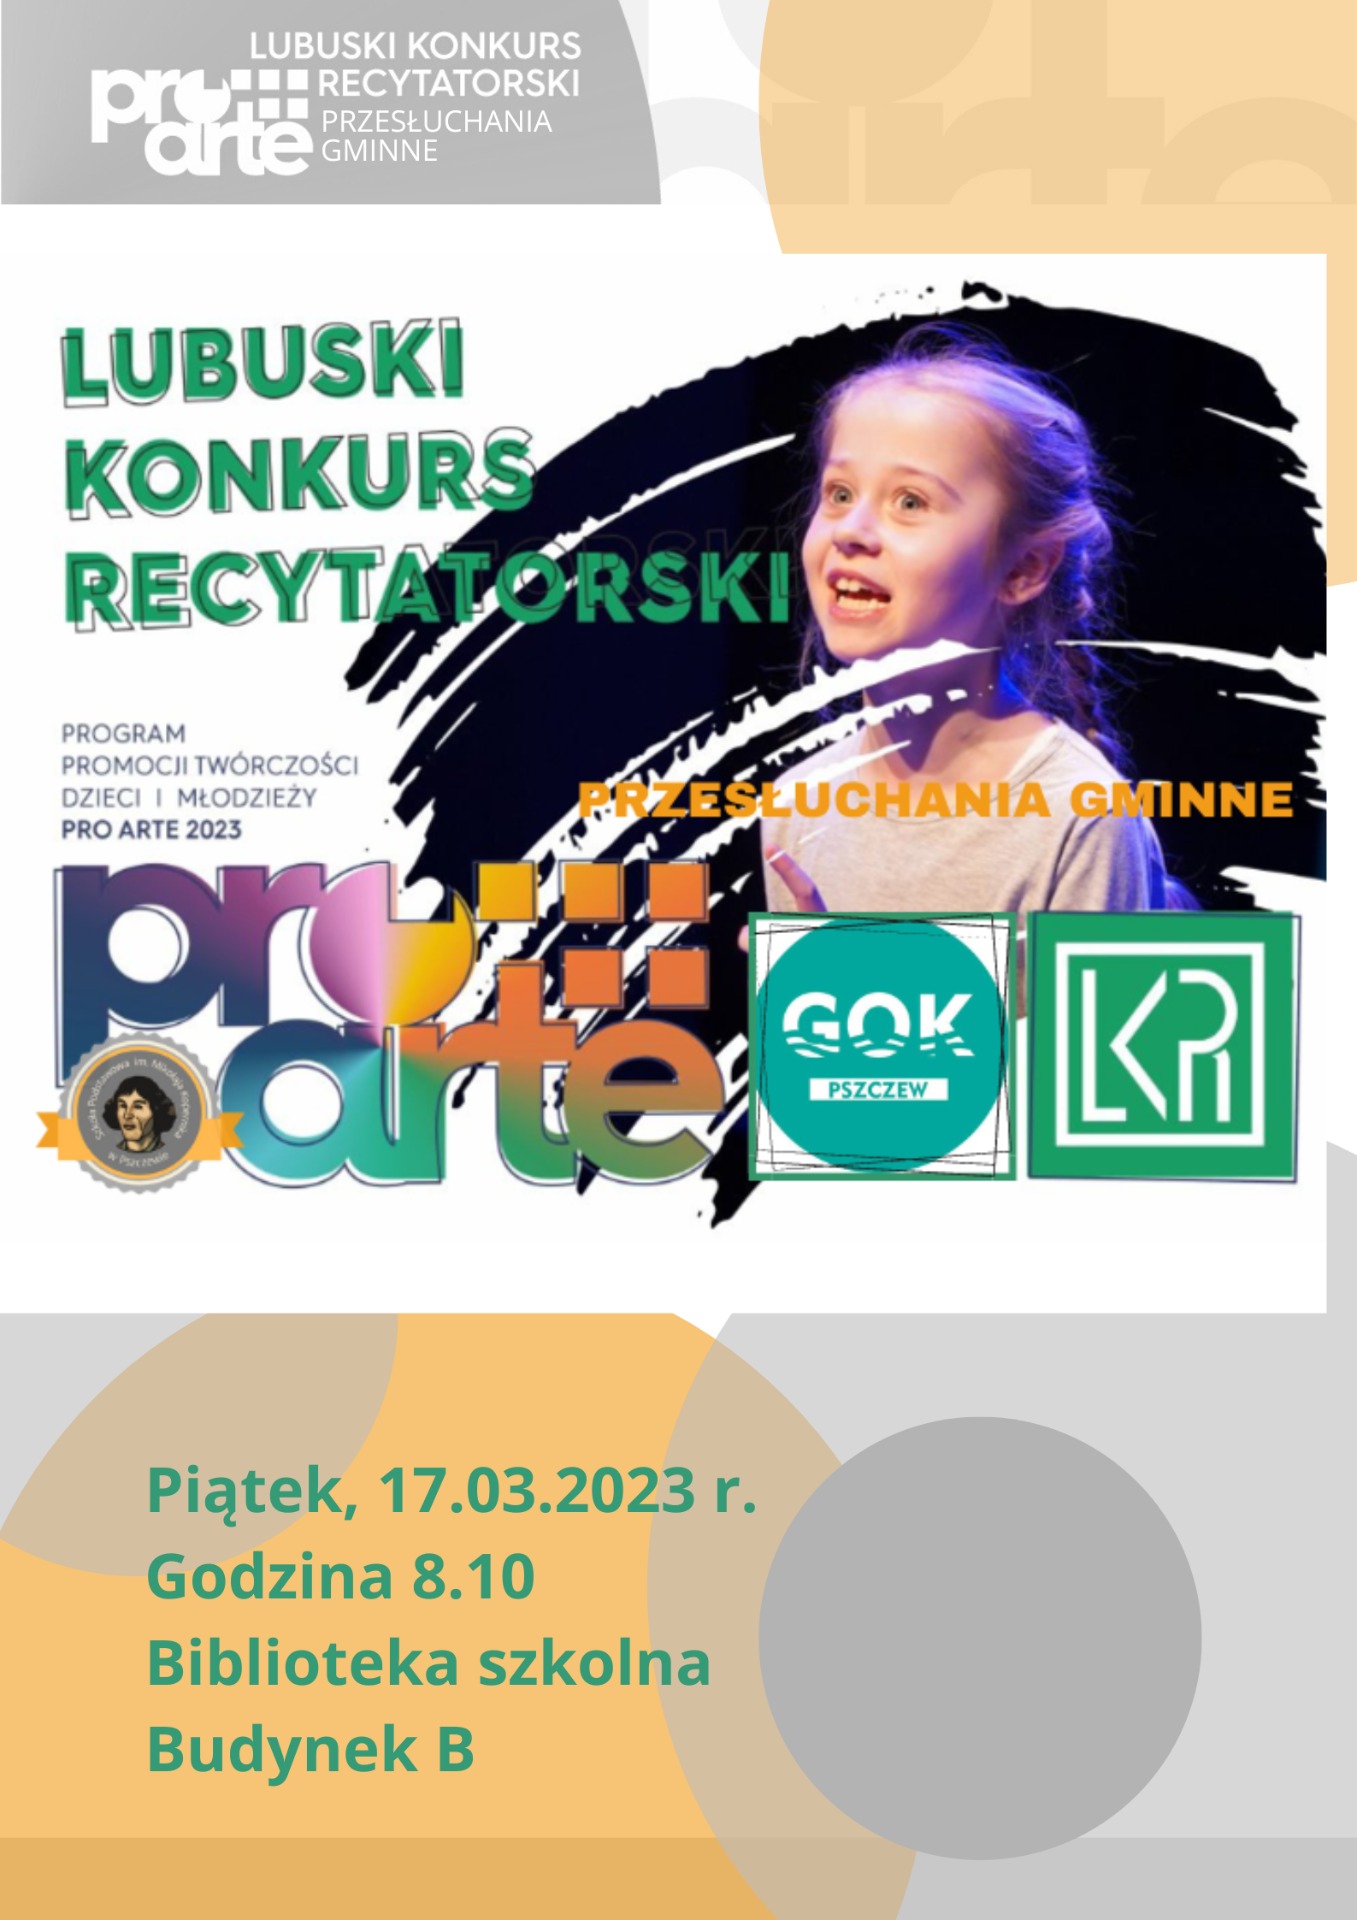 Lubuski Konkurs Recytatorski- etap gminny 17.03.2023 - Obrazek 2